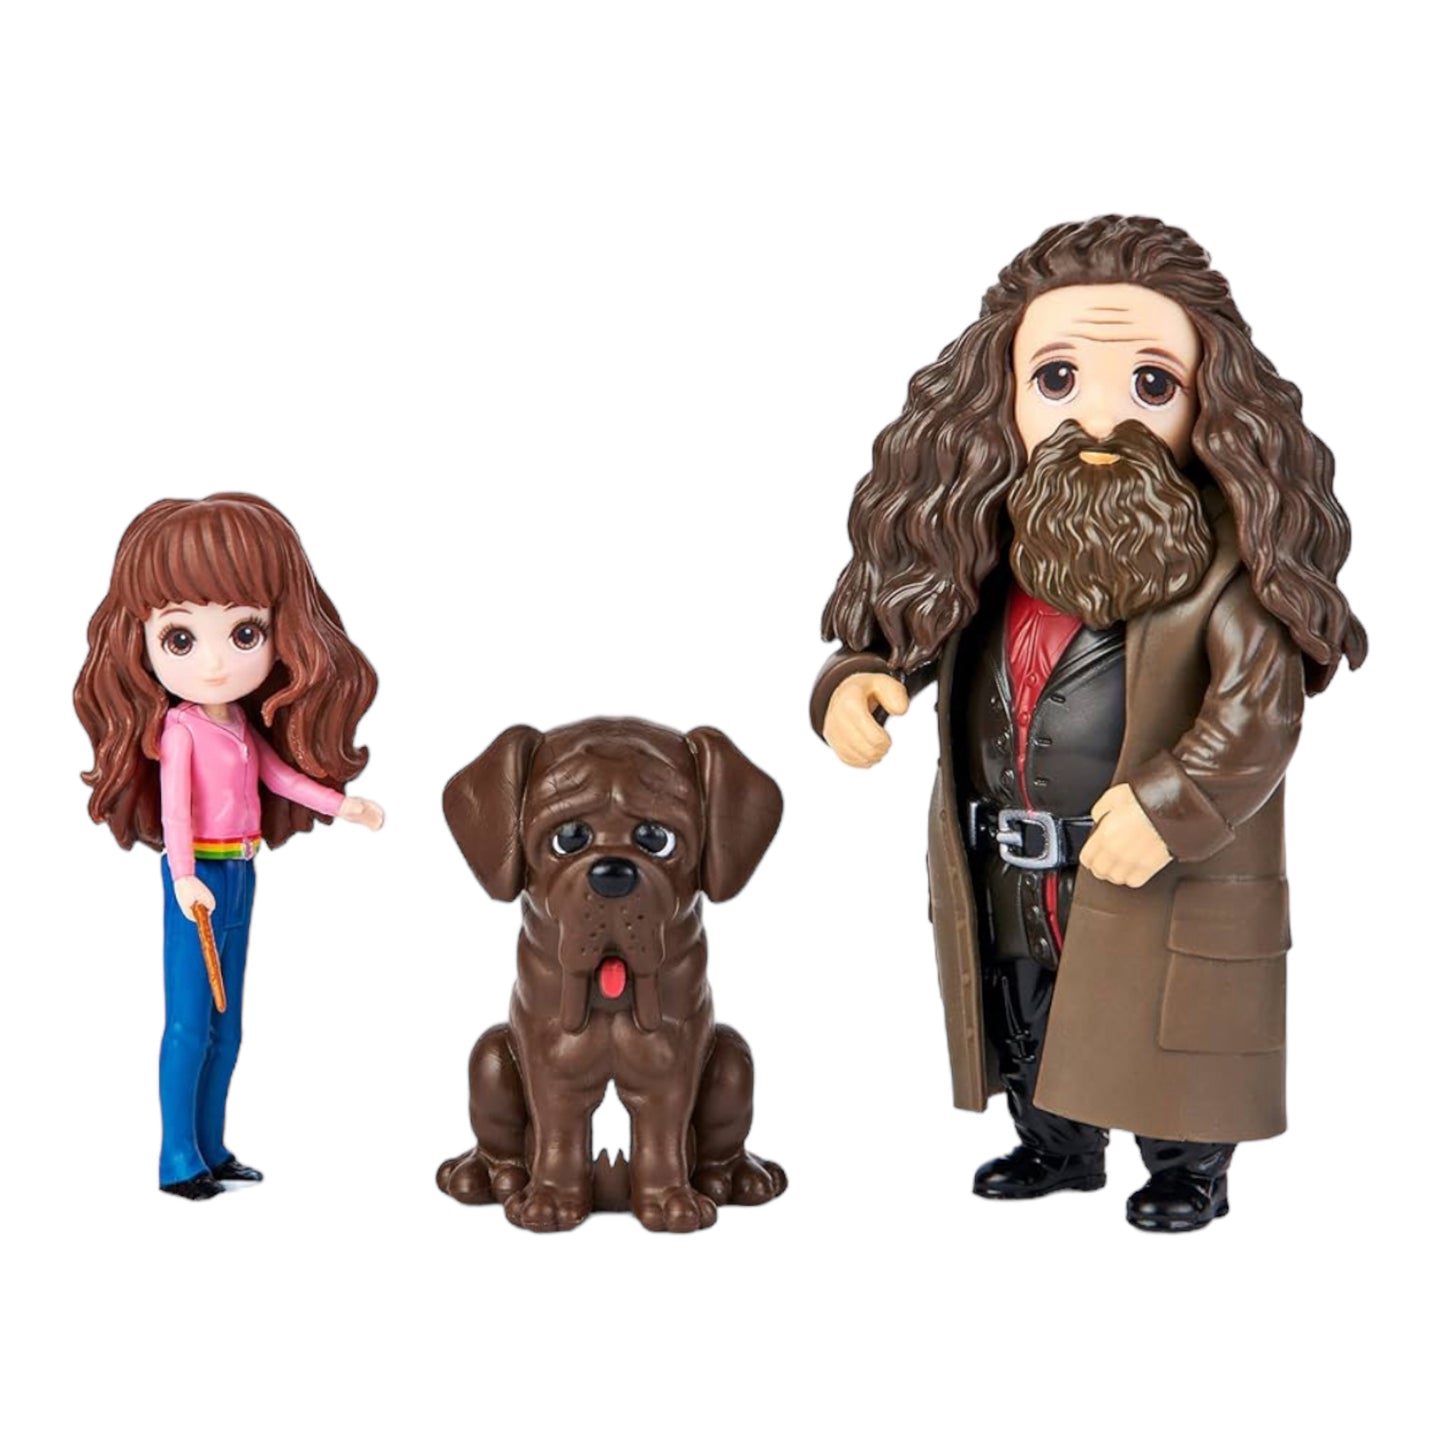 Set Friendship Mini Figuras Mágicas Hermione y Hagrid Spin Master